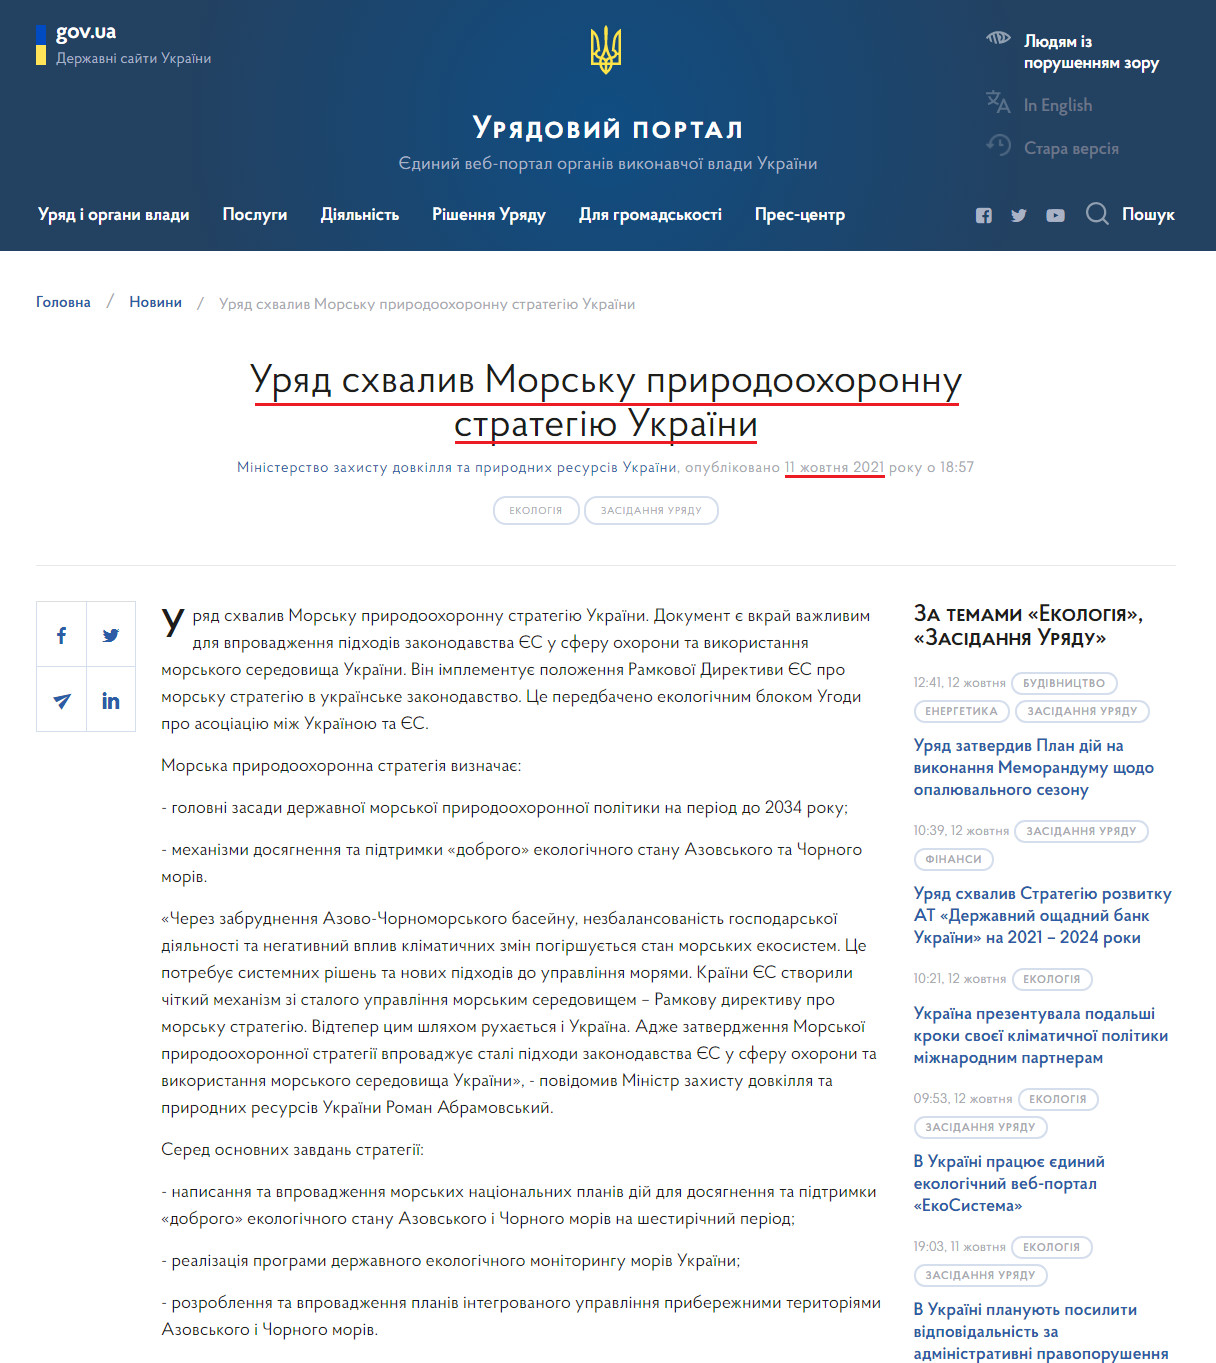 https://www.kmu.gov.ua/news/uryad-shvaliv-morsku-prirodoohoronnu-strategiyu-ukrayini